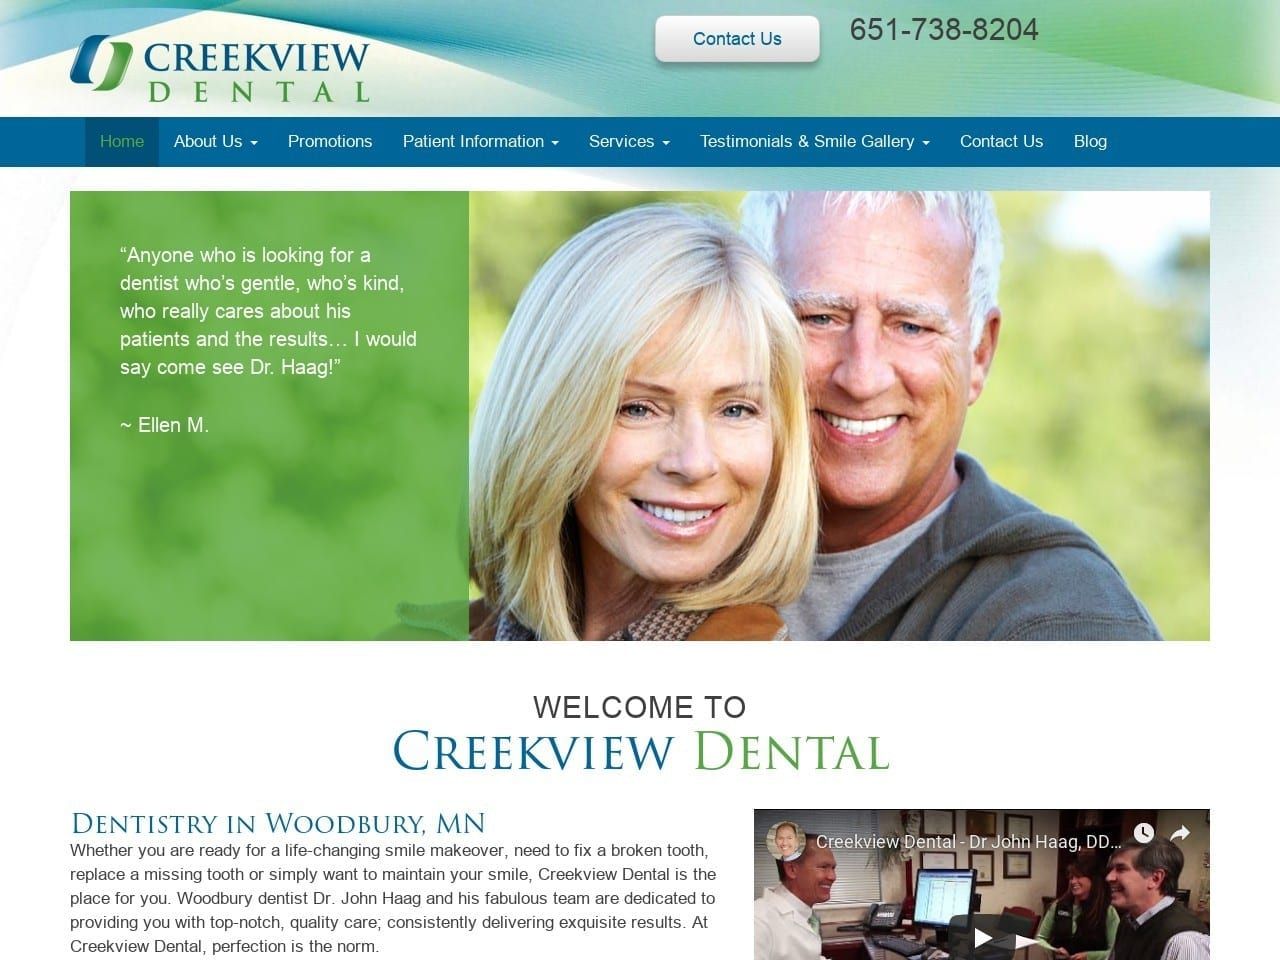 Creekview Dental Website Screenshot from creekviewdental.com